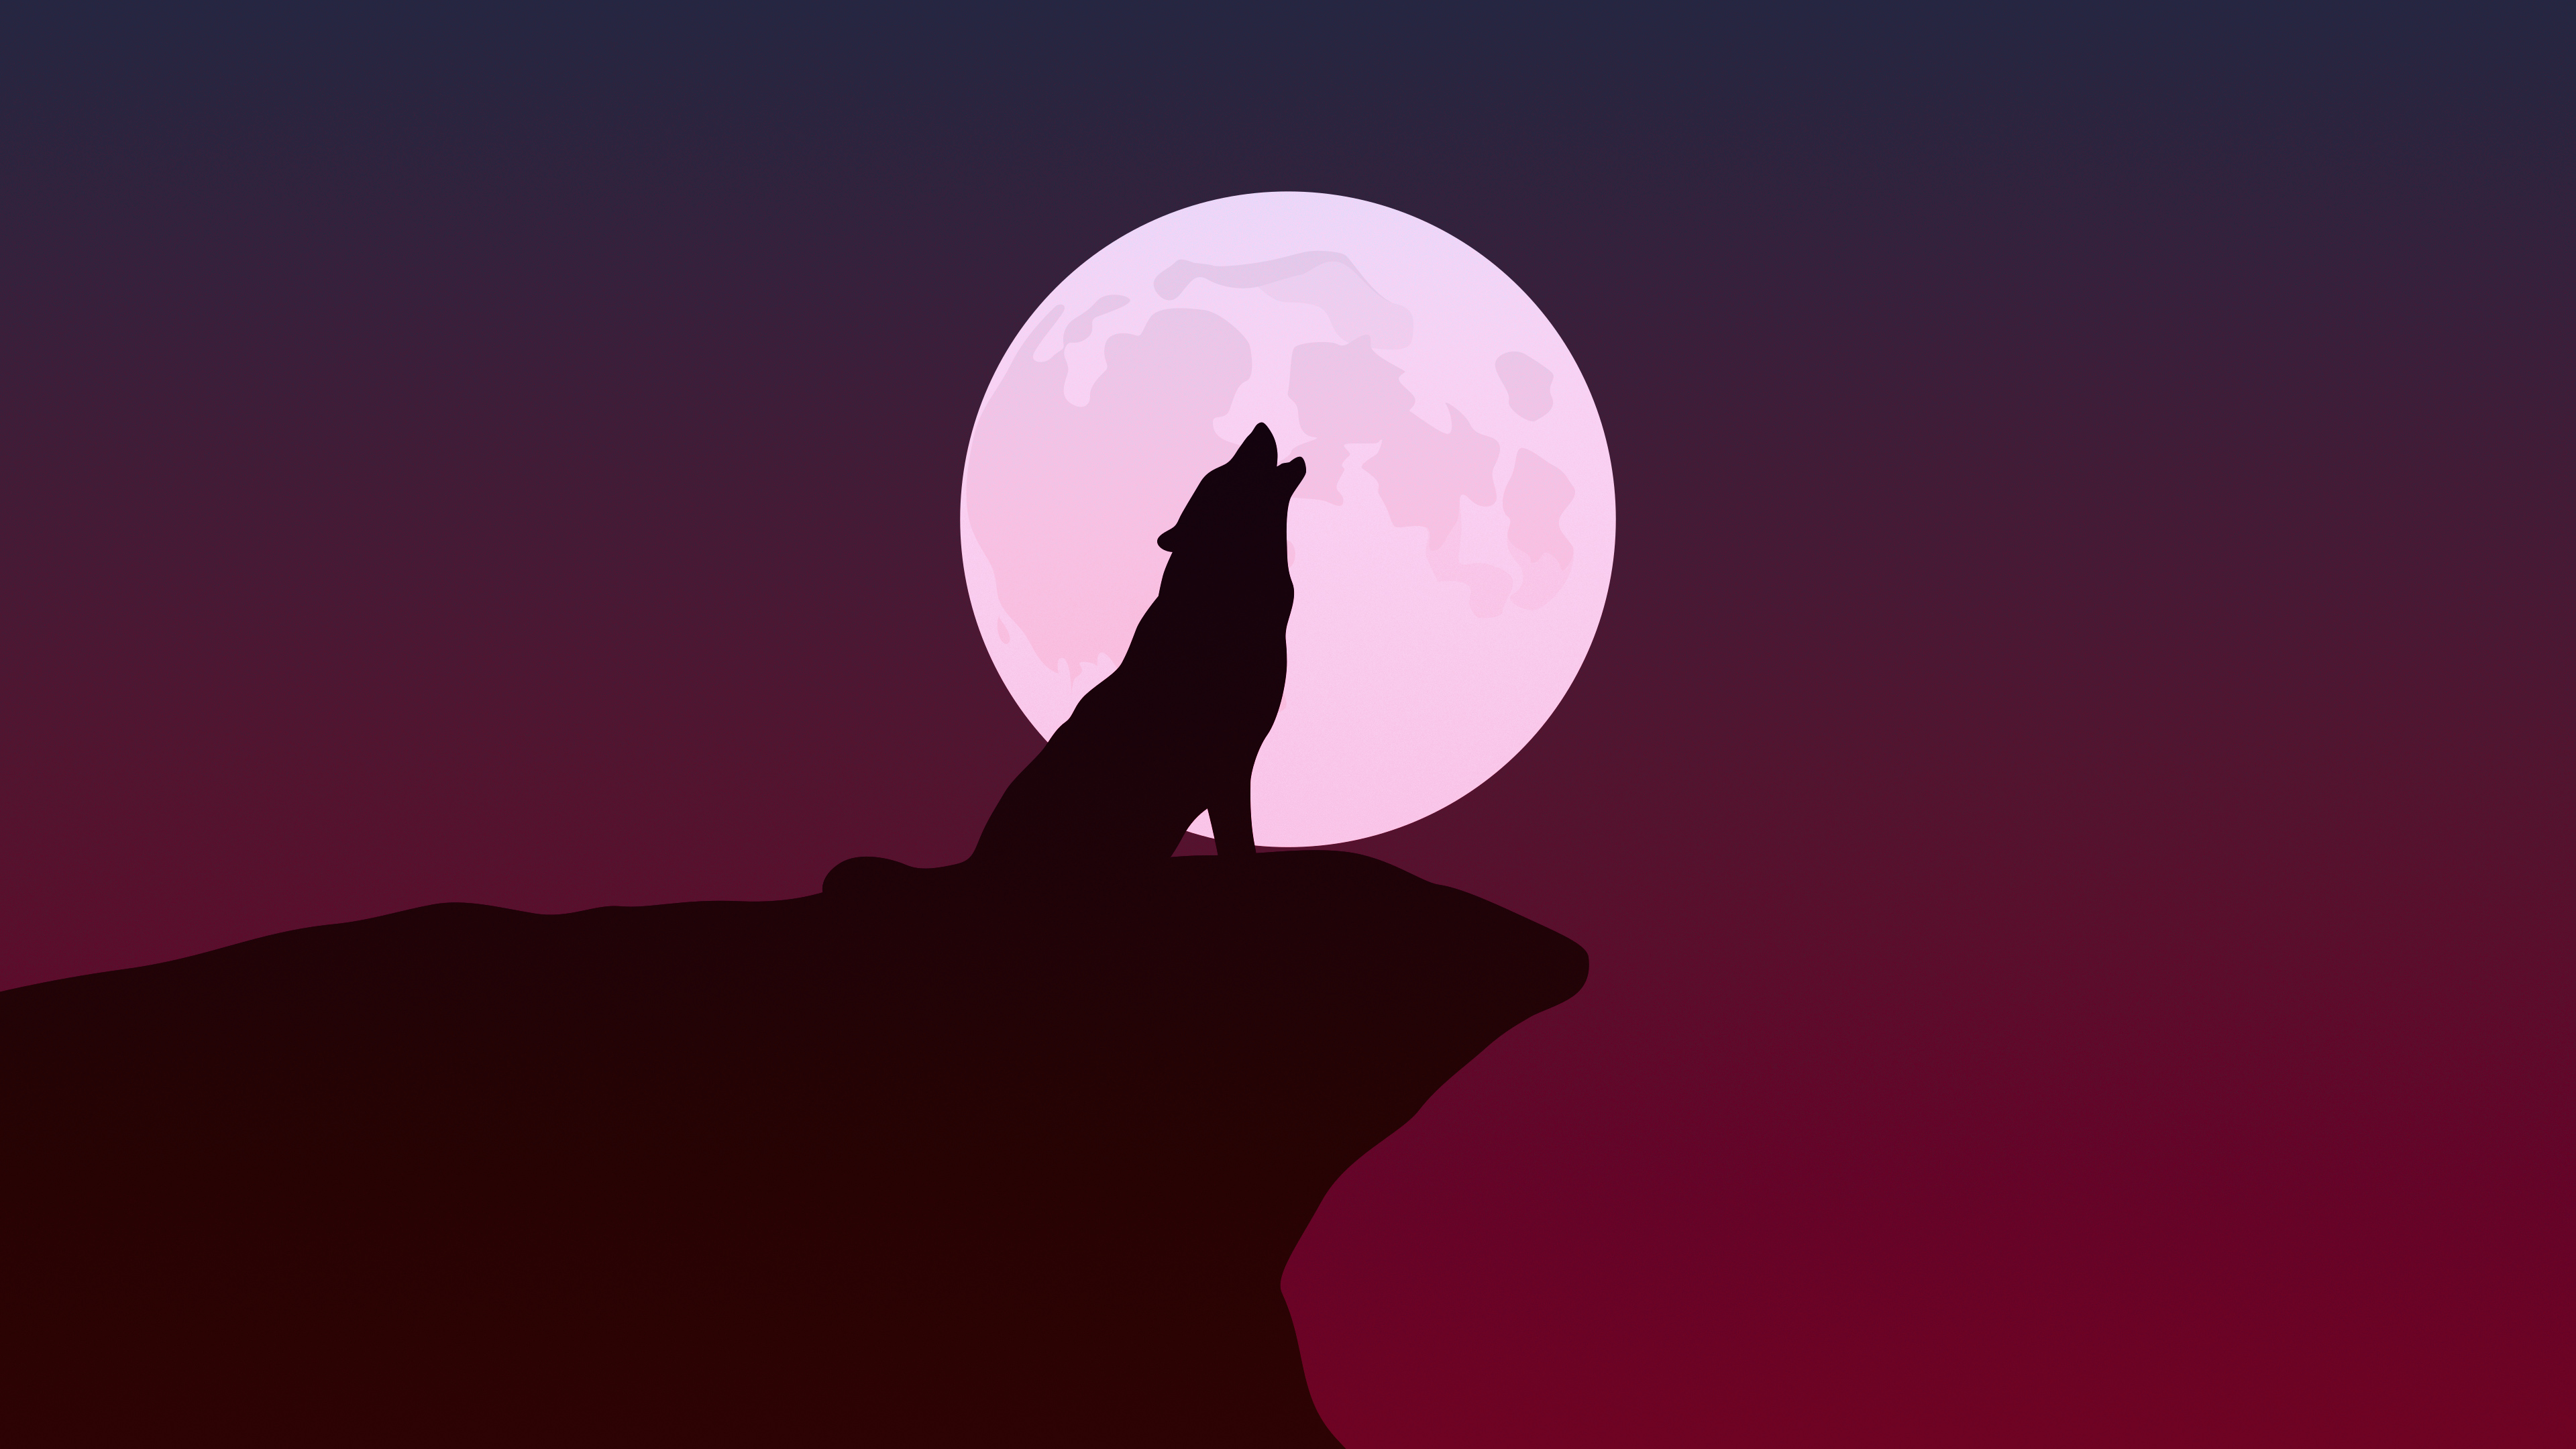 Howling Wolf Minimalist 4k, HD Artist, 4k Wallpaper, Image